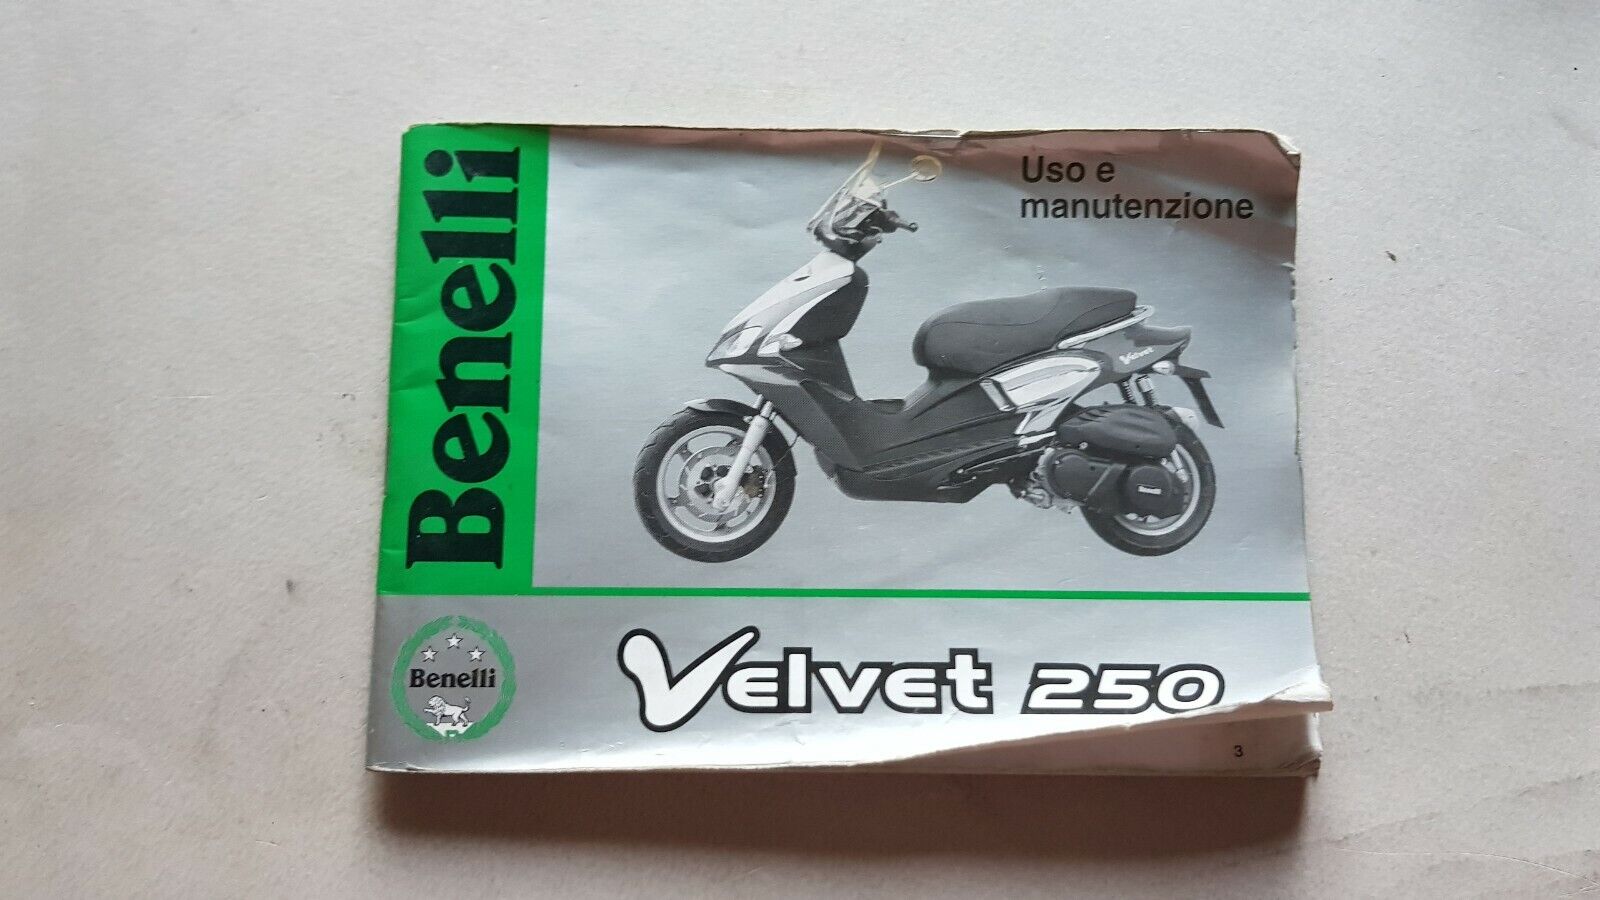 Benelli 250 Velvet scooter manuale uso originale moto owner's manual